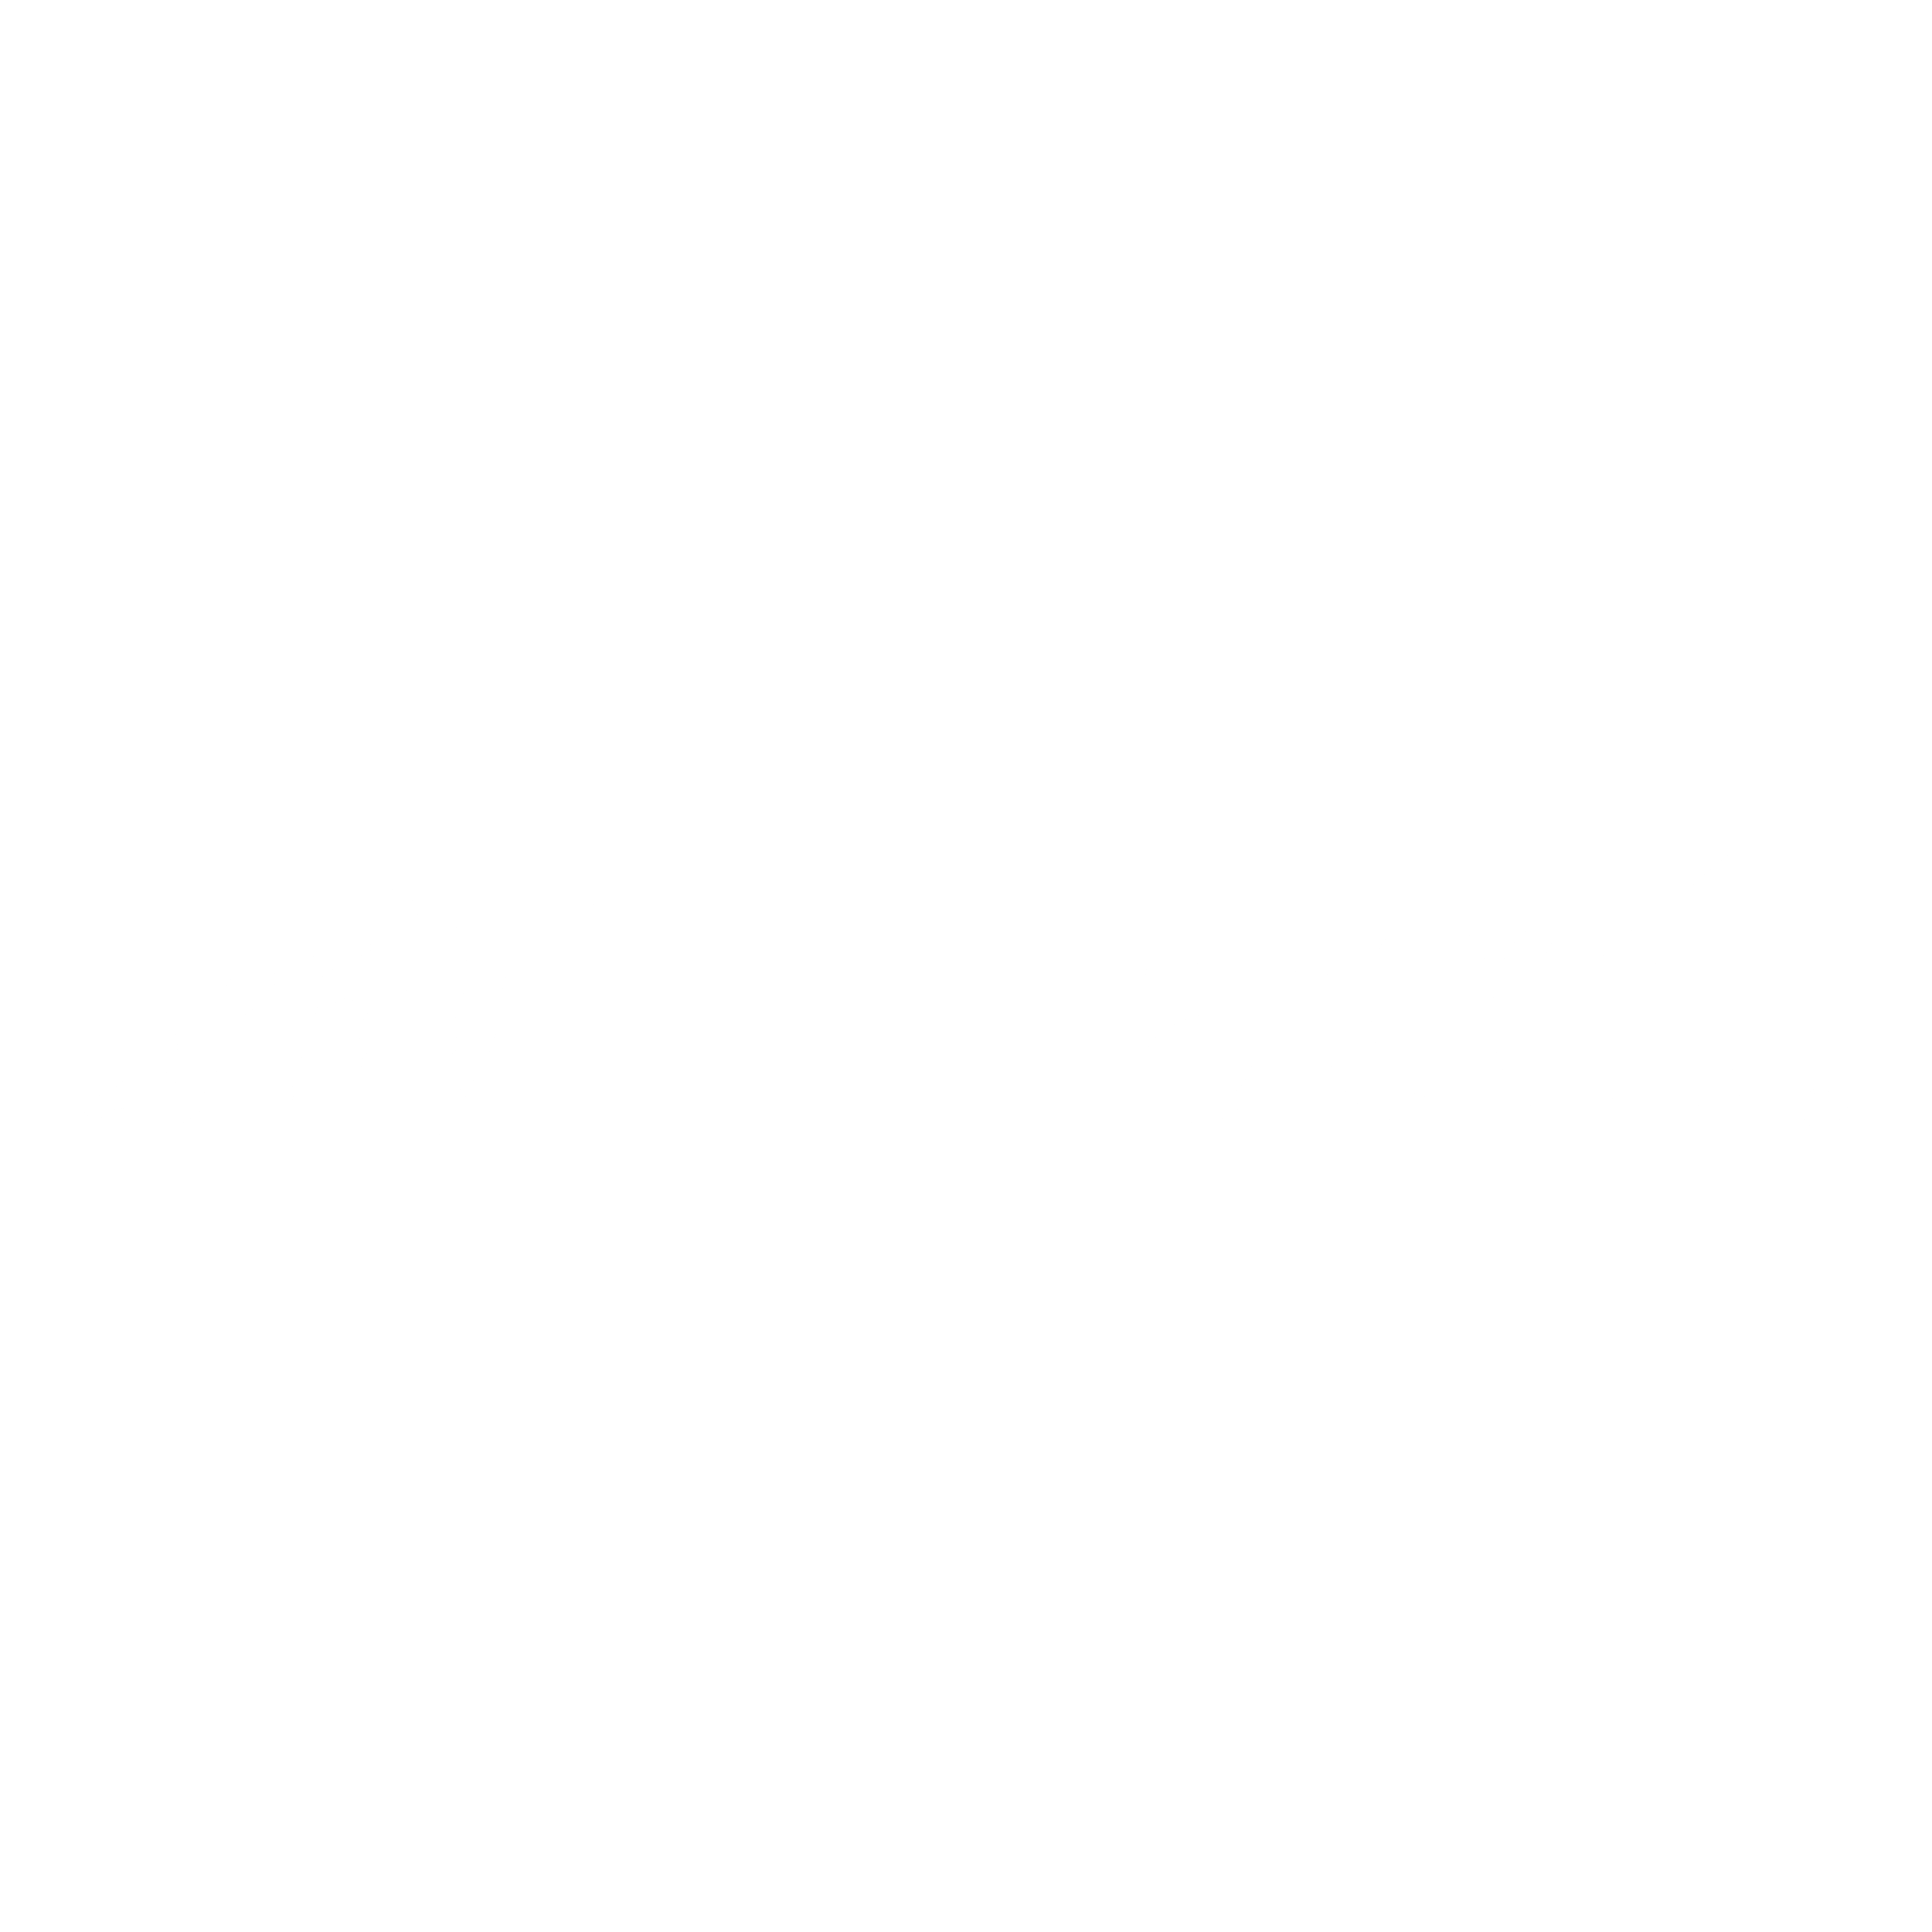 Intacct Logo - Intacct Logo PNG Transparent & SVG Vector - Freebie Supply